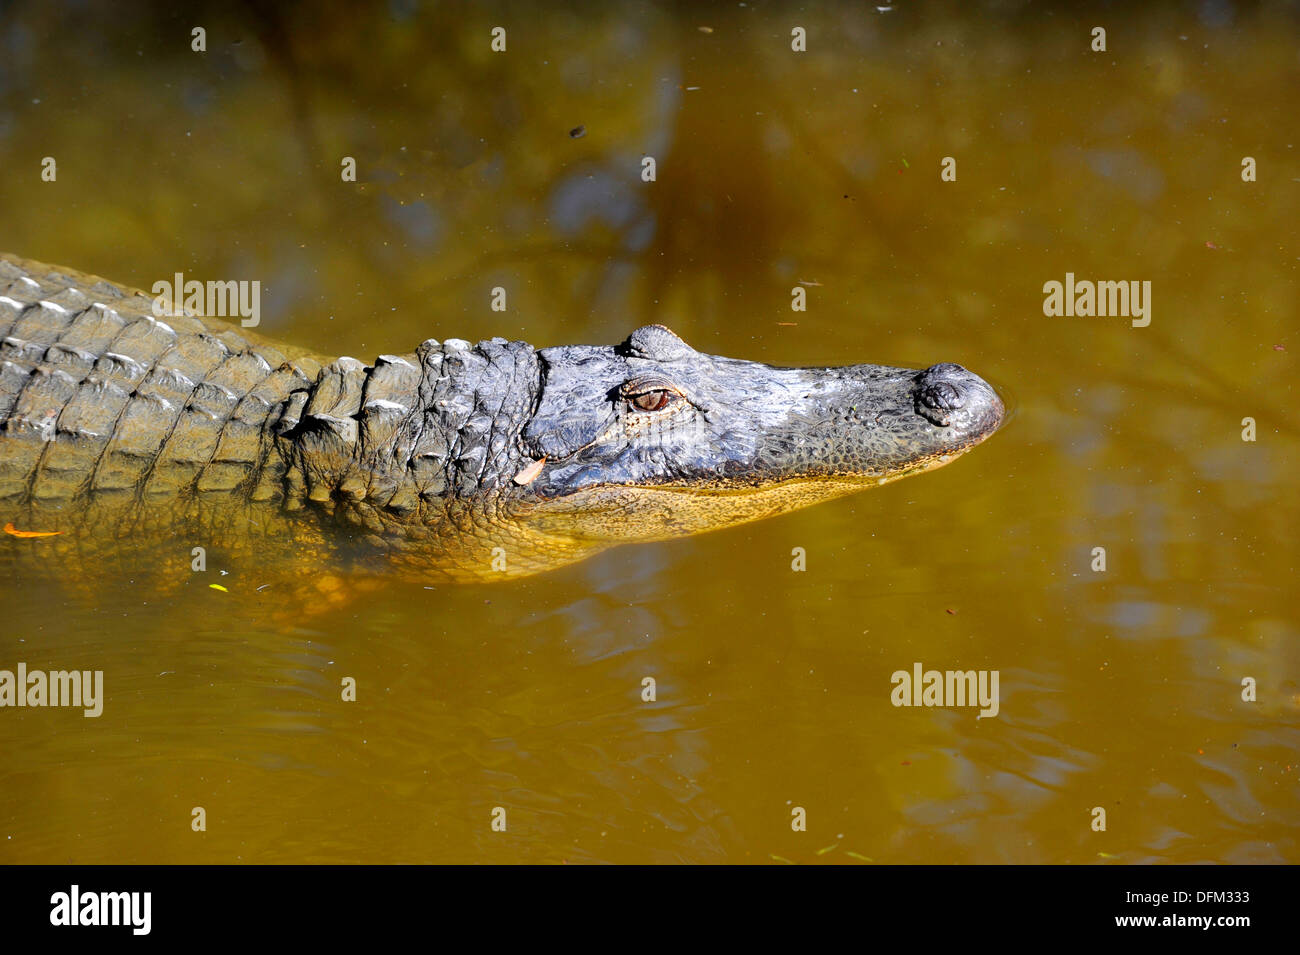 Lowry Park Zoo. St. Petersburg. Florida. American Alligator Stock Photo